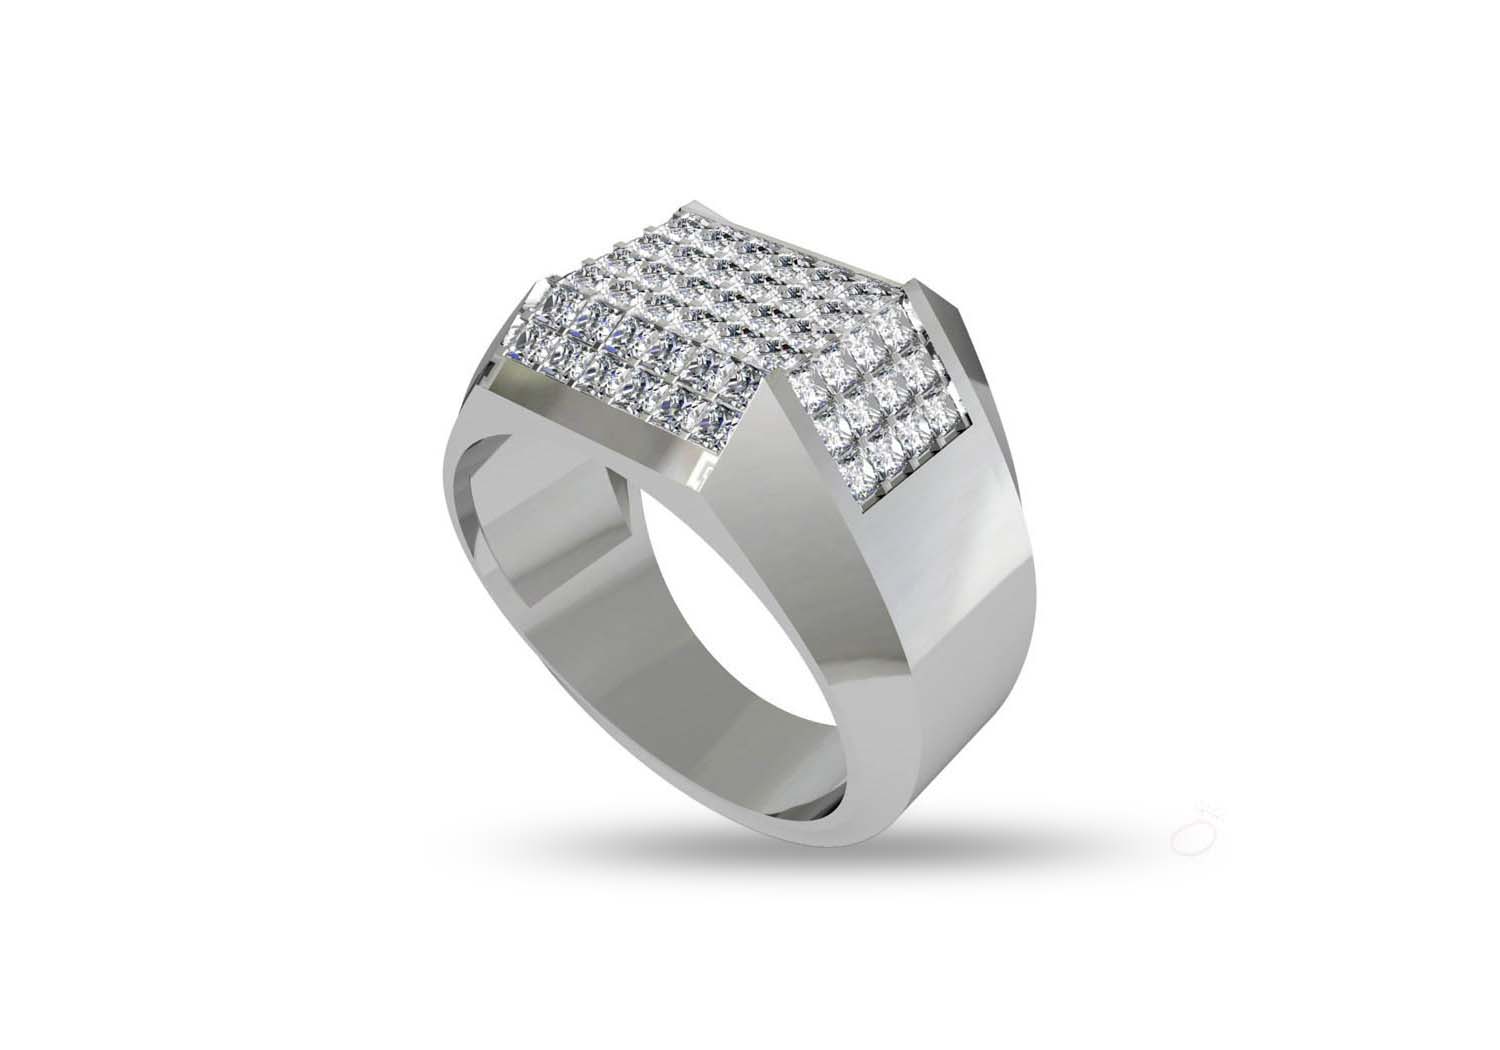 Buy 14 k Gold Lab Diamond Mens Ring at Best Online Price